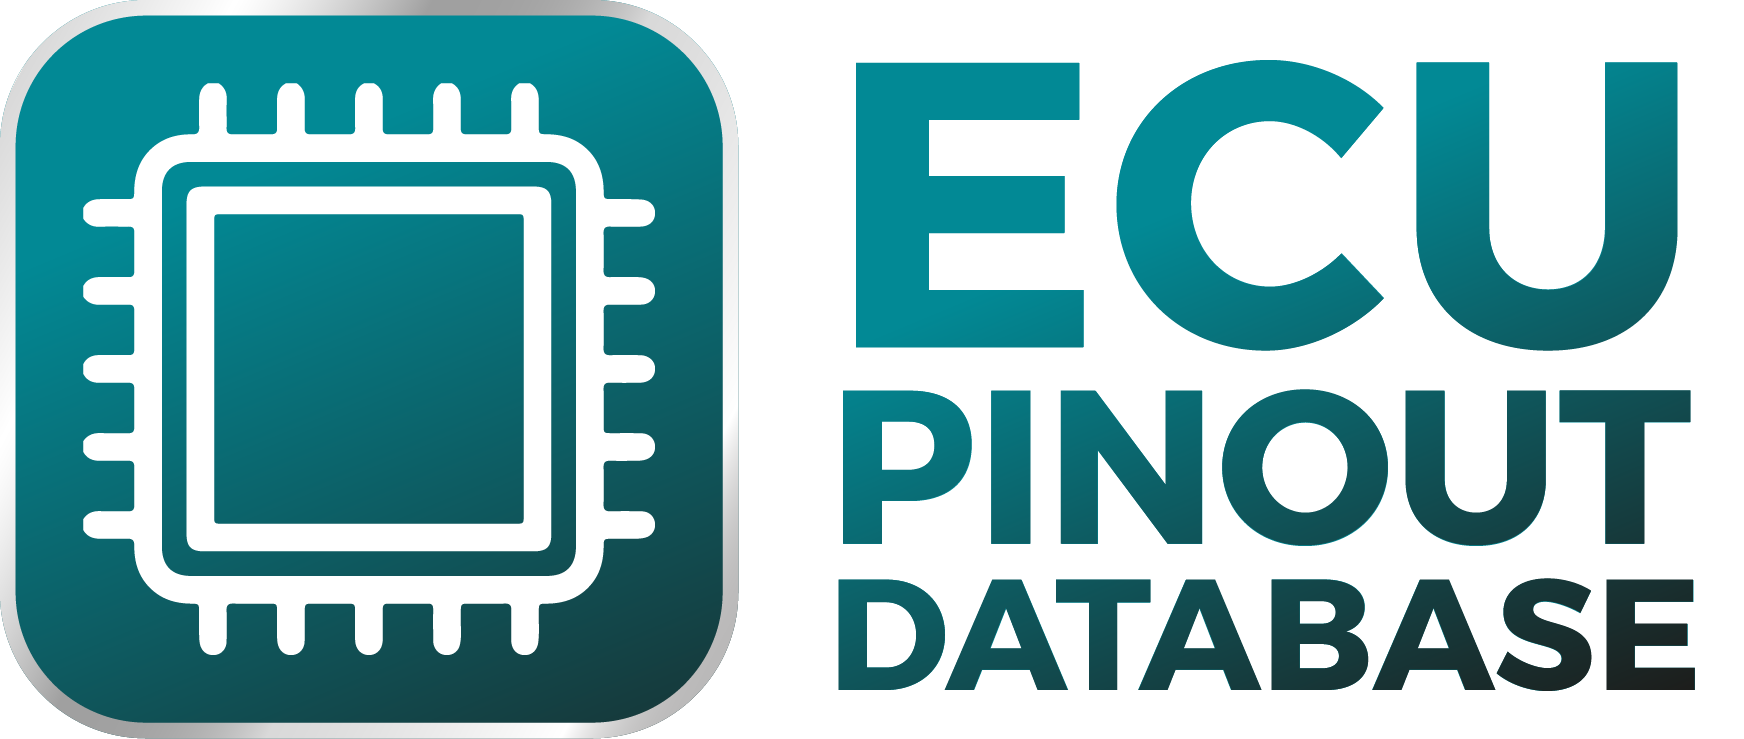 ECU Pinout Database | Home